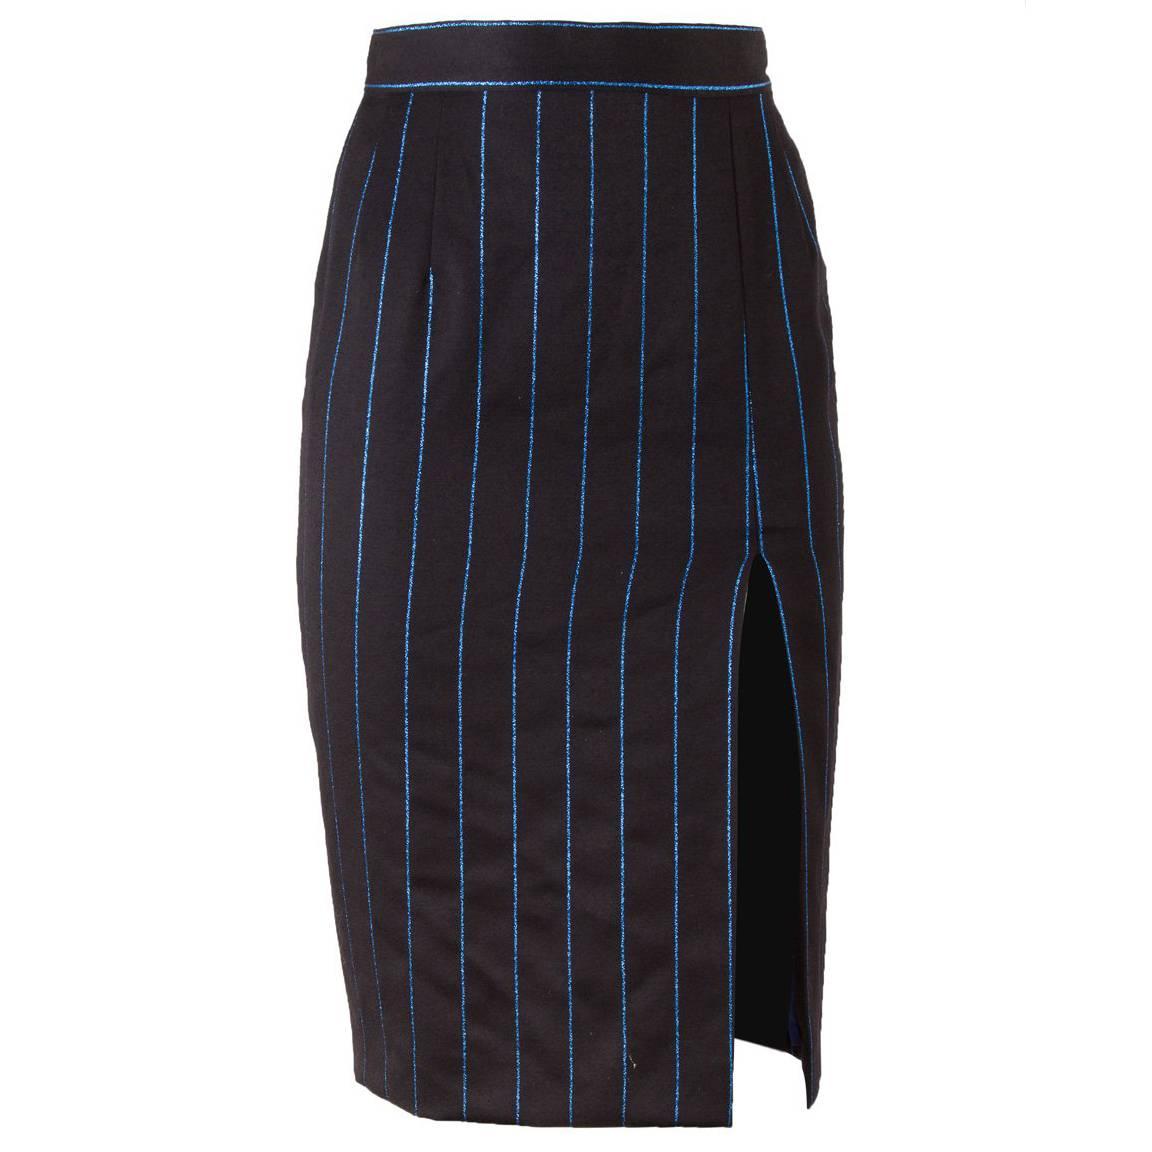 Chantal Thomass 1980's NWT Black Pinstripe Pencil Skirt For Sale